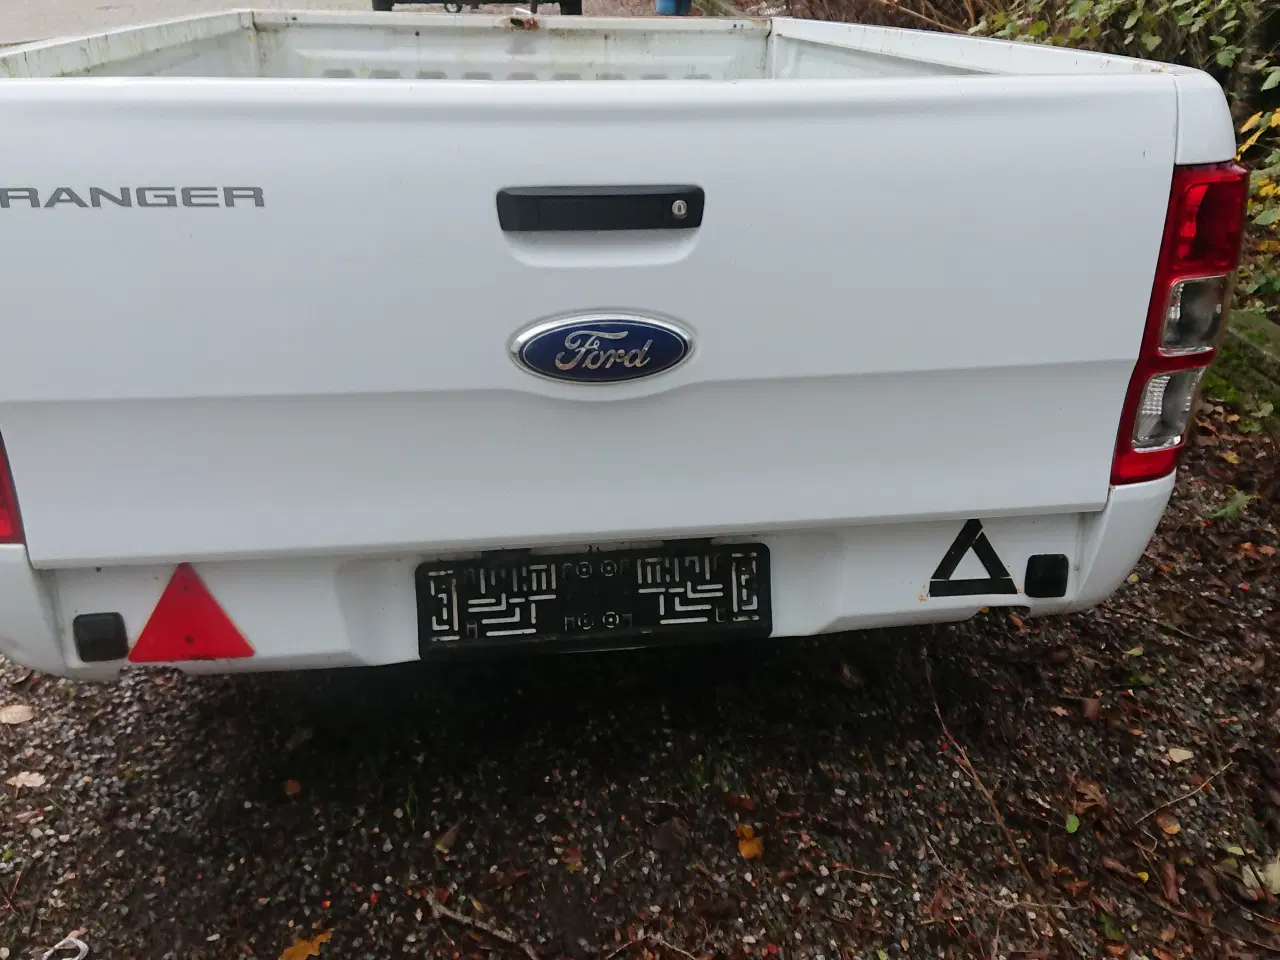 Billede 4 - Ford Ranger trailer